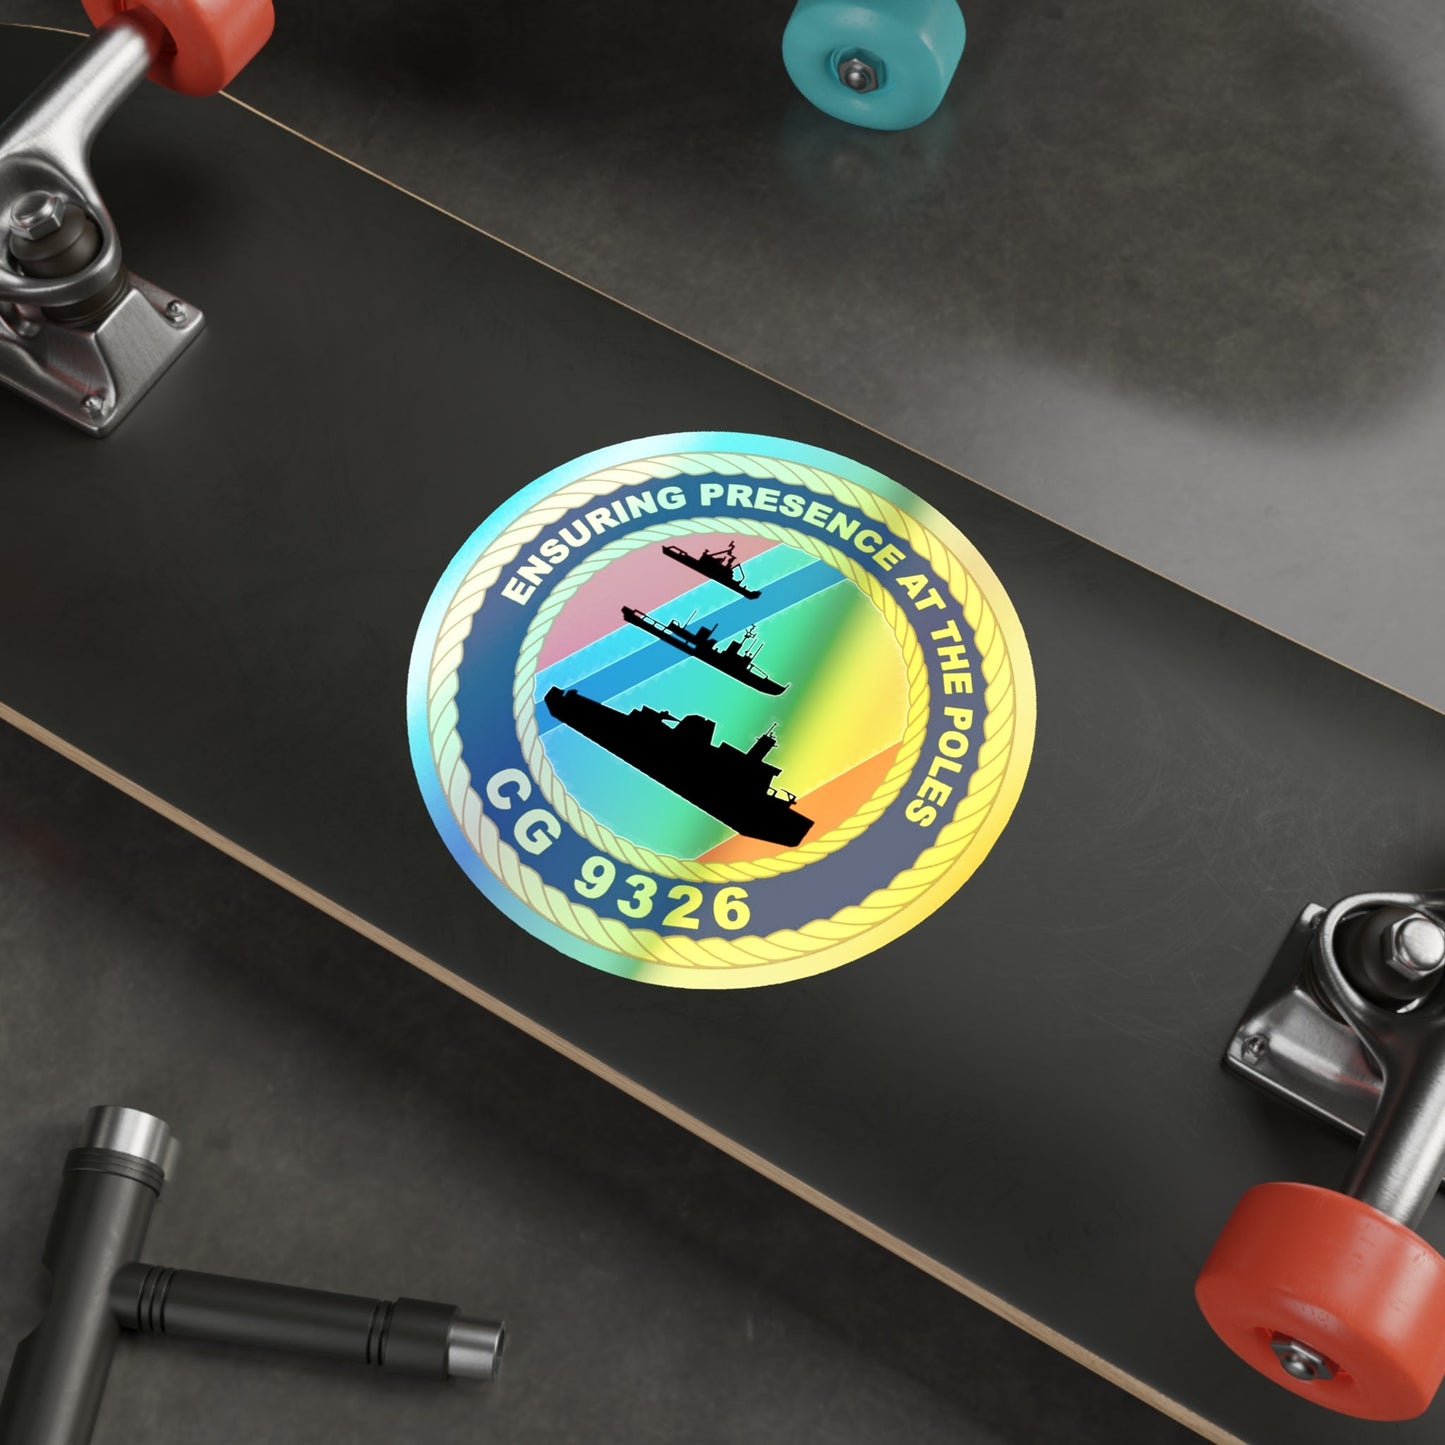 CG 9326 (U.S. Coast Guard) Holographic STICKER Die-Cut Vinyl Decal-The Sticker Space